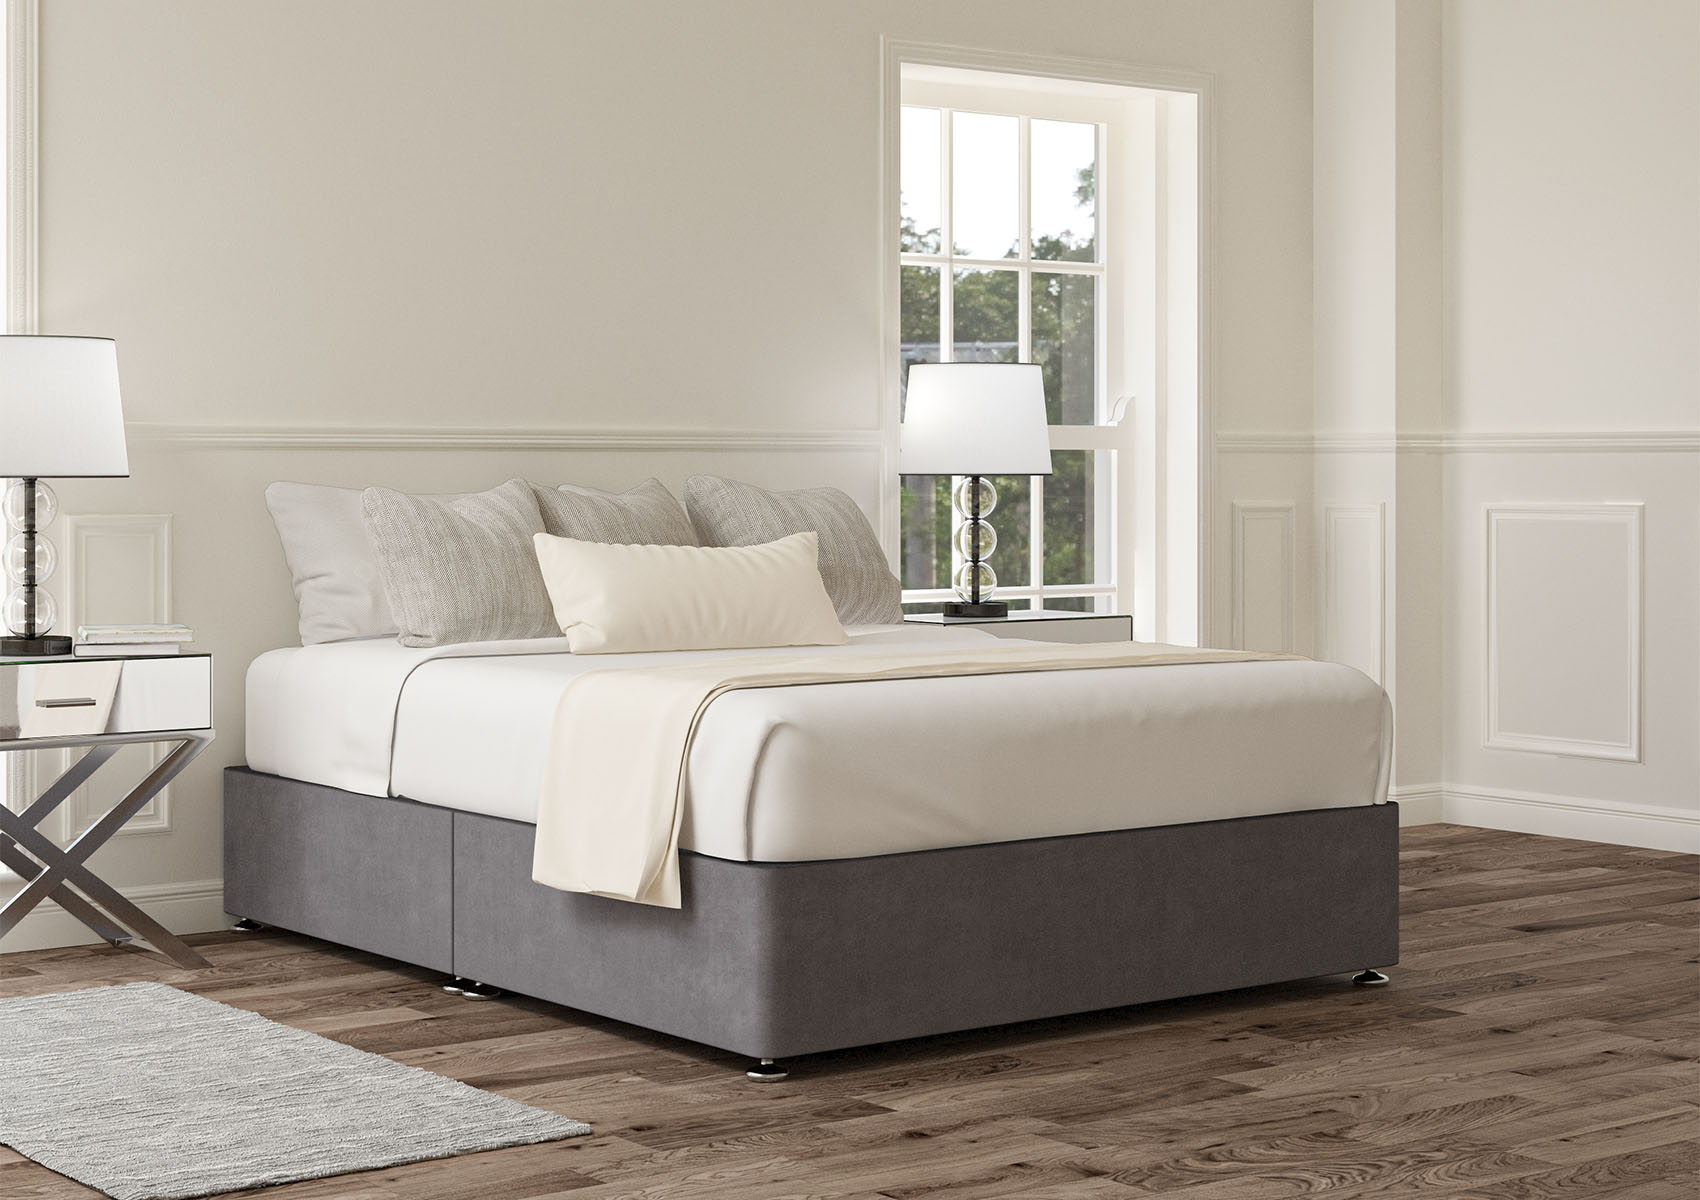 View Upholstered Plush Mink Upholstered Single Divan Bed Time4Sleep information